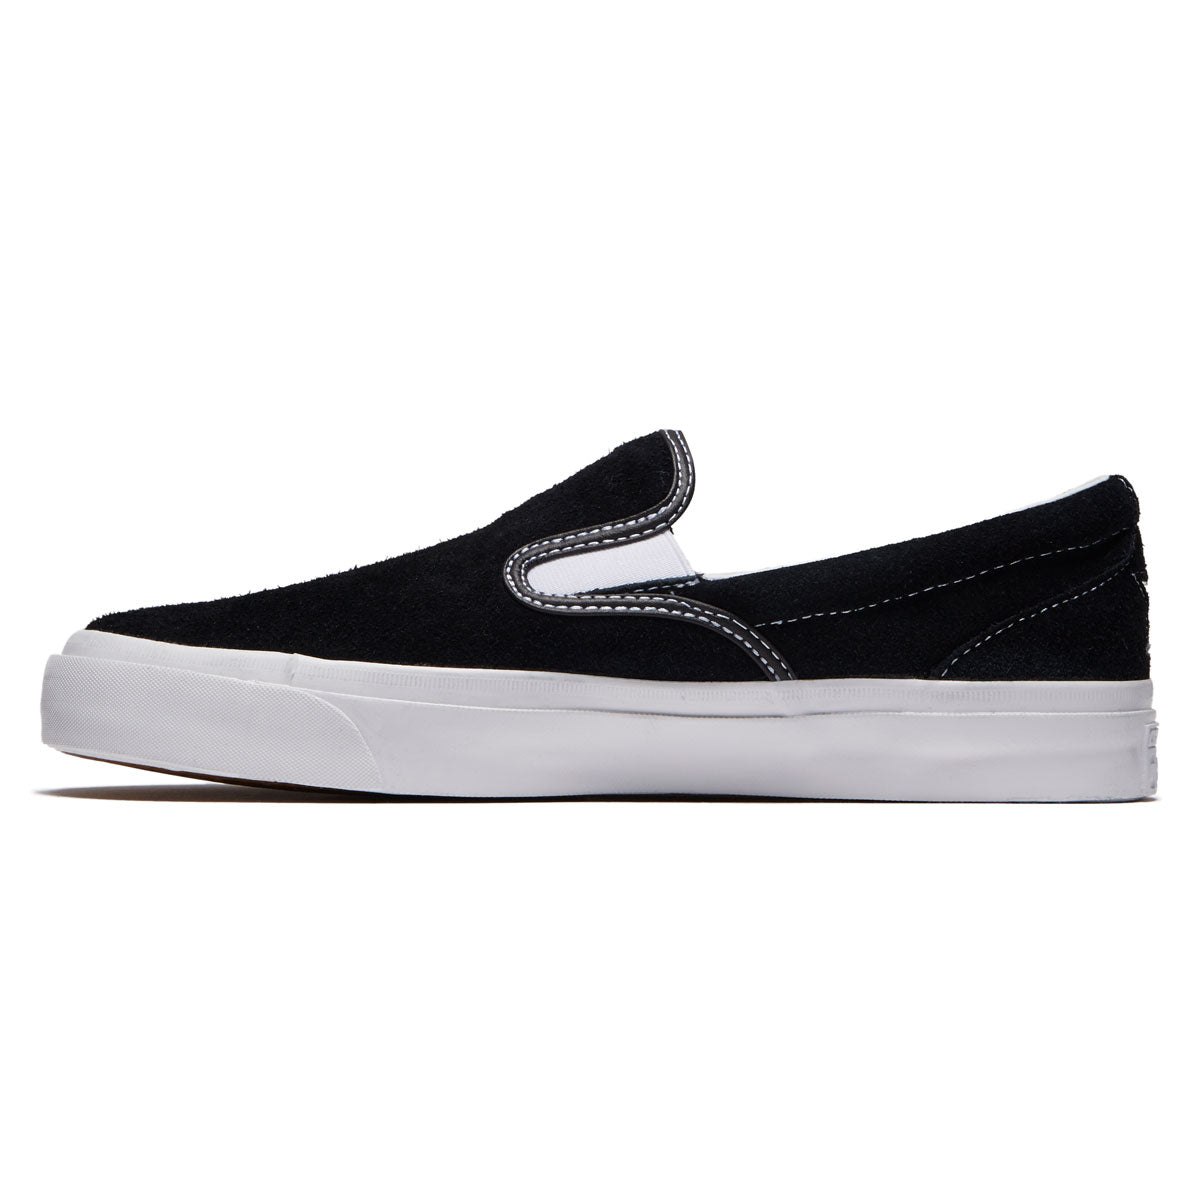 Converse One Star Cc Slip Pro Shoes - Black/White/White image 2